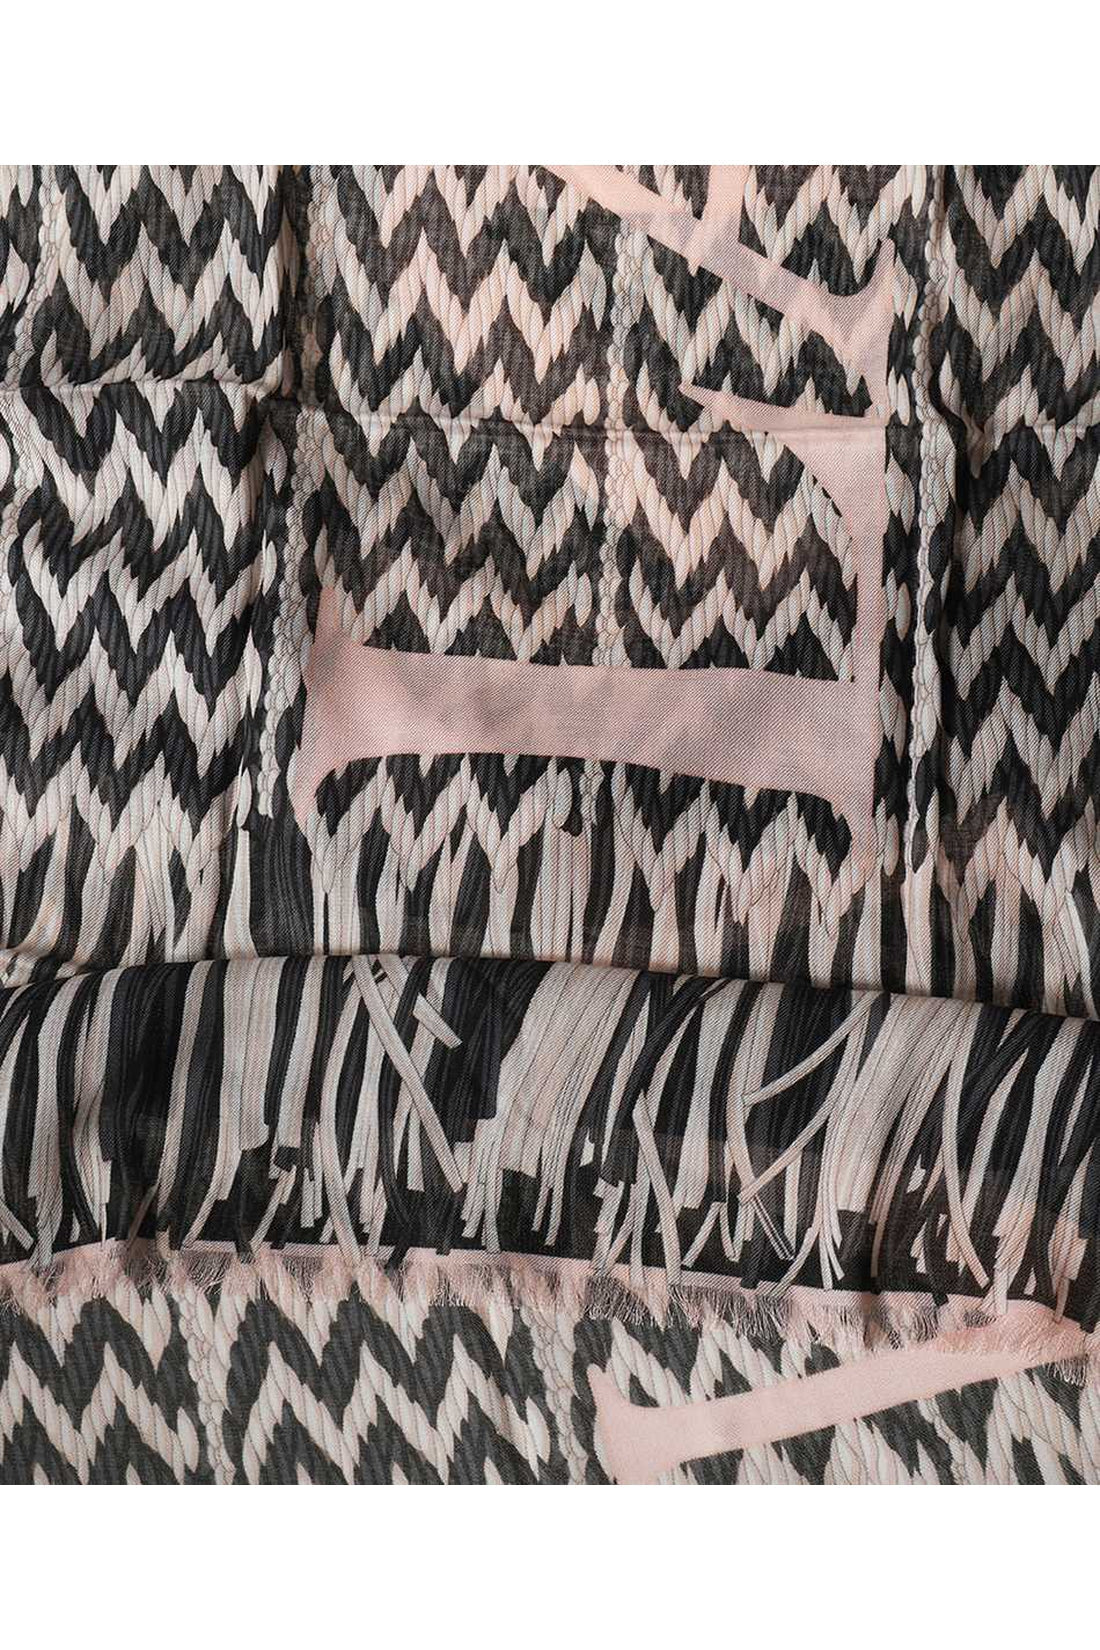 Lanvin-OUTLET-SALE-Printed shawl-ARCHIVIST